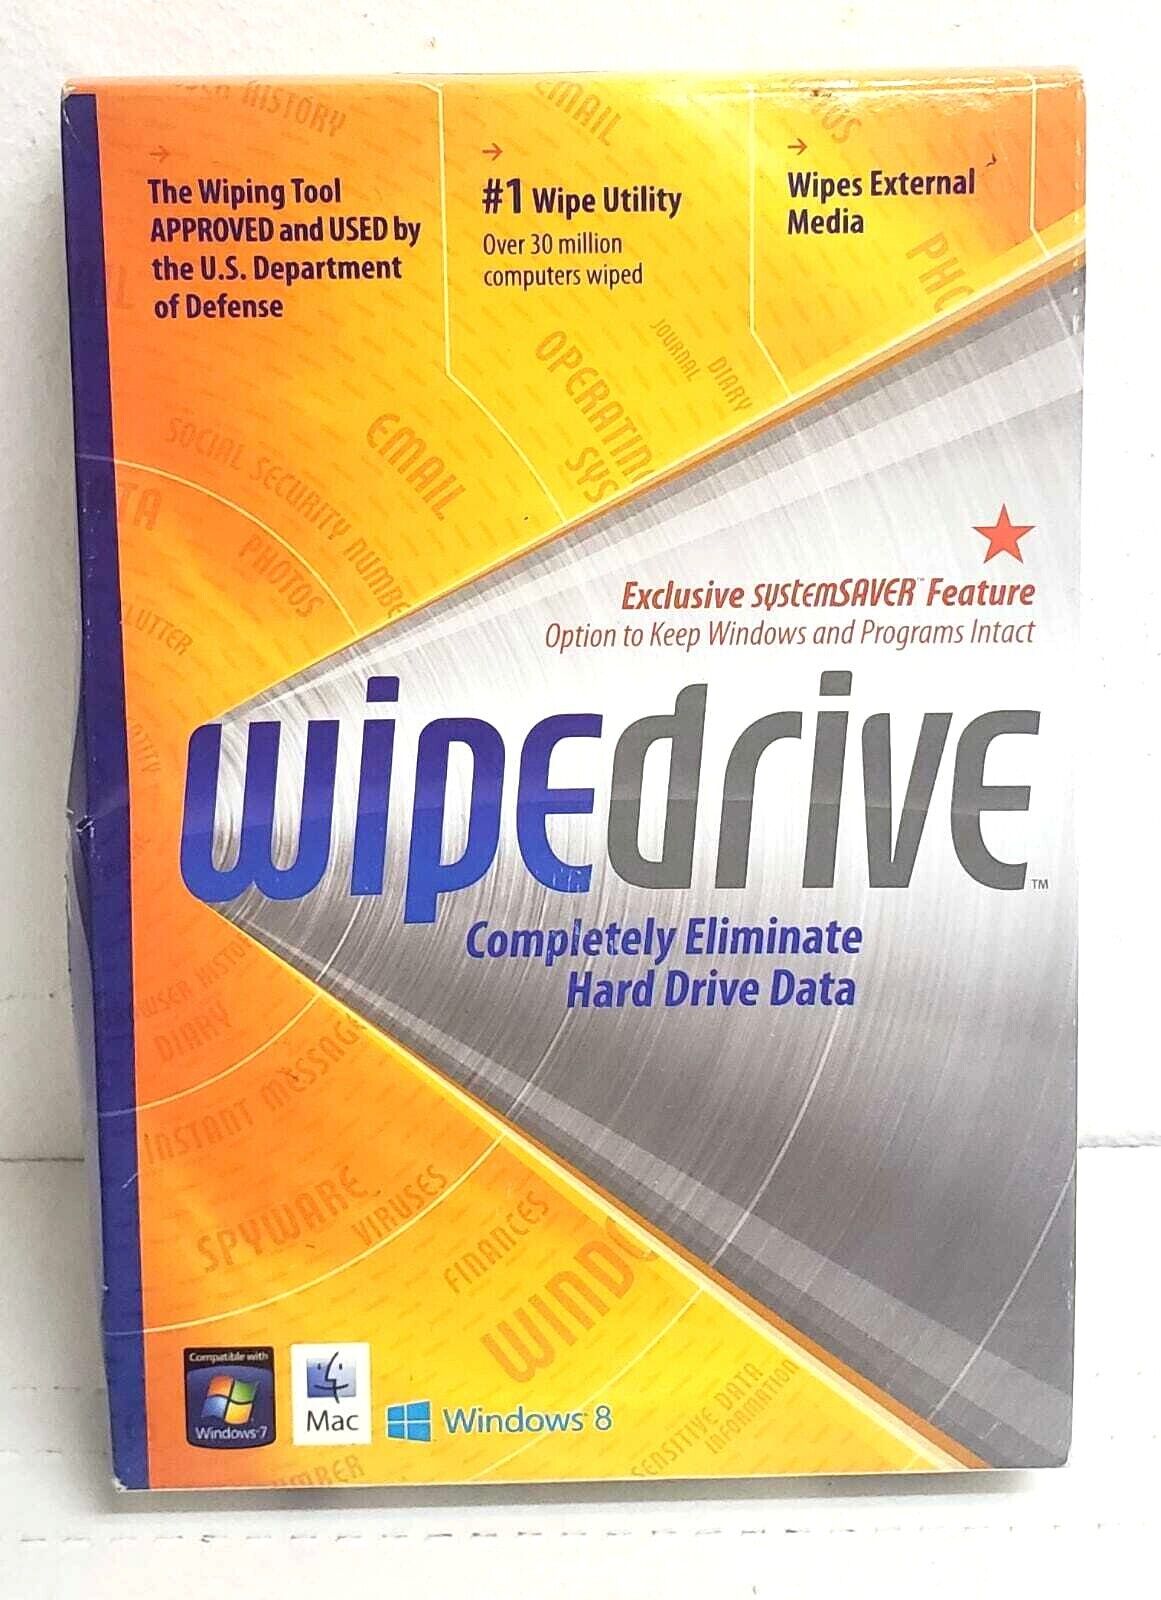 Wipedrive 6 Eliminate Hard Drive Data Software *distressed Box*